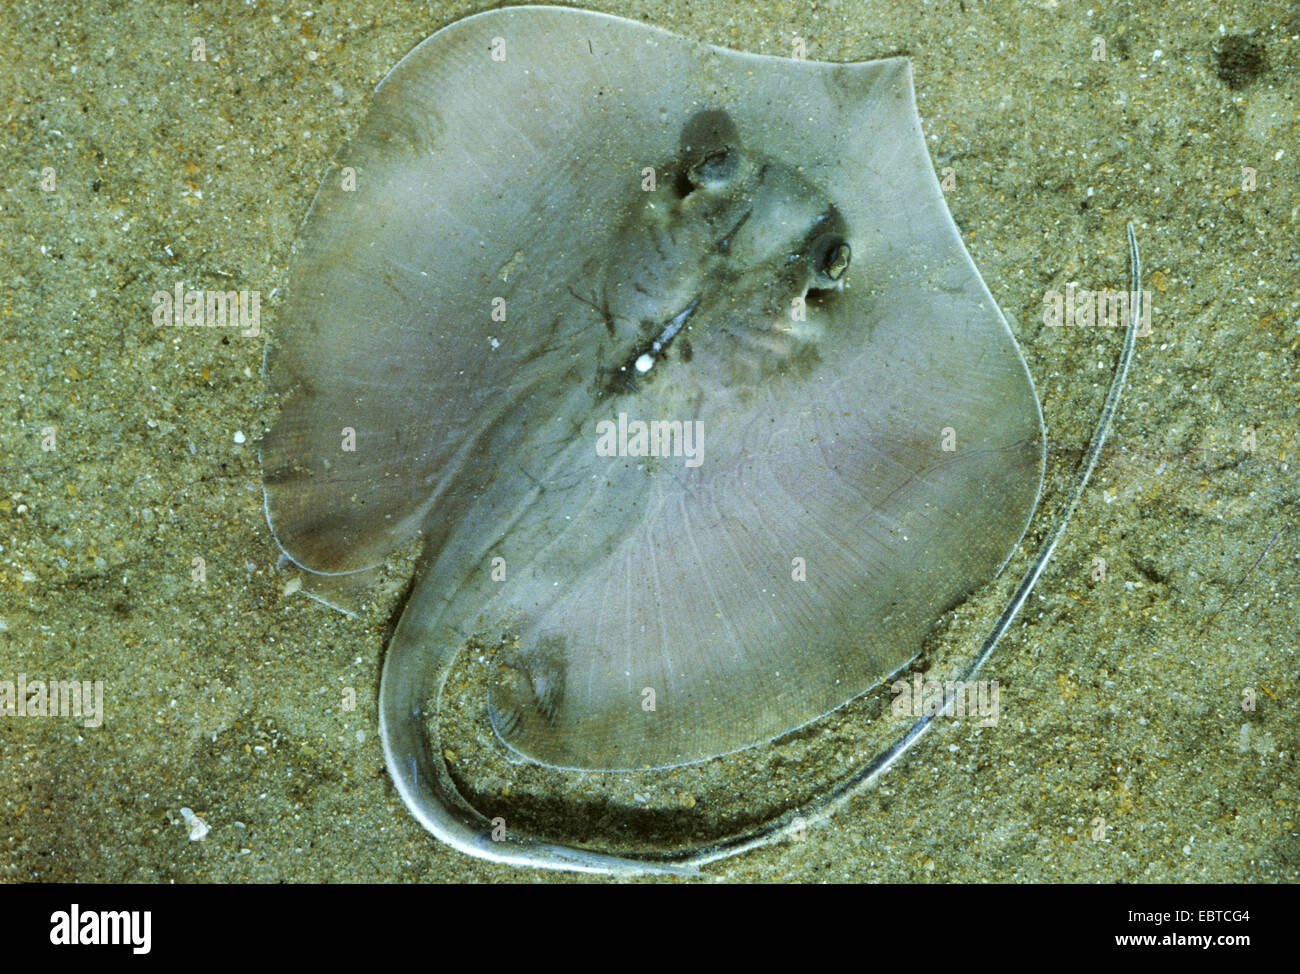 blue stingray, European stingray, common stingray (Dasyatis pastinaca), at the sandy bottom of the sea Stock Photo